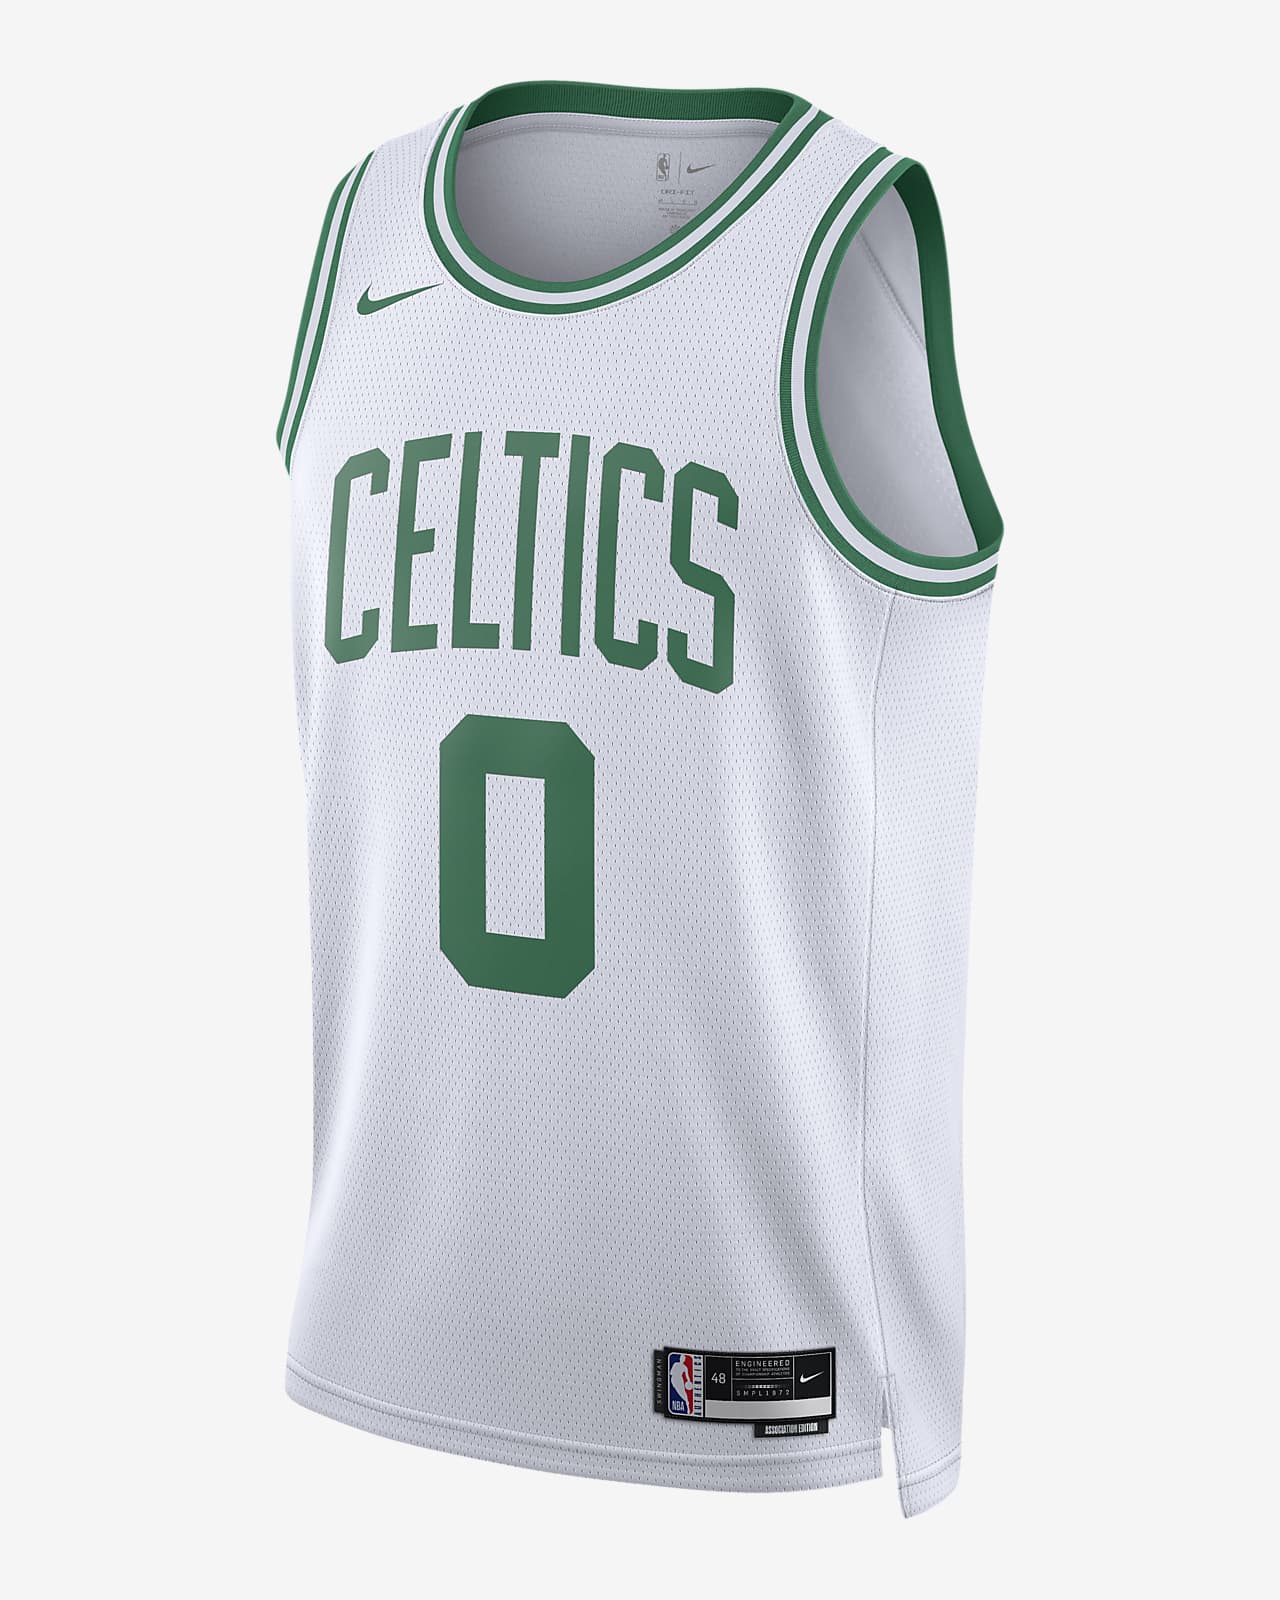 2022-23 Nike NBA City Edition Uniforms